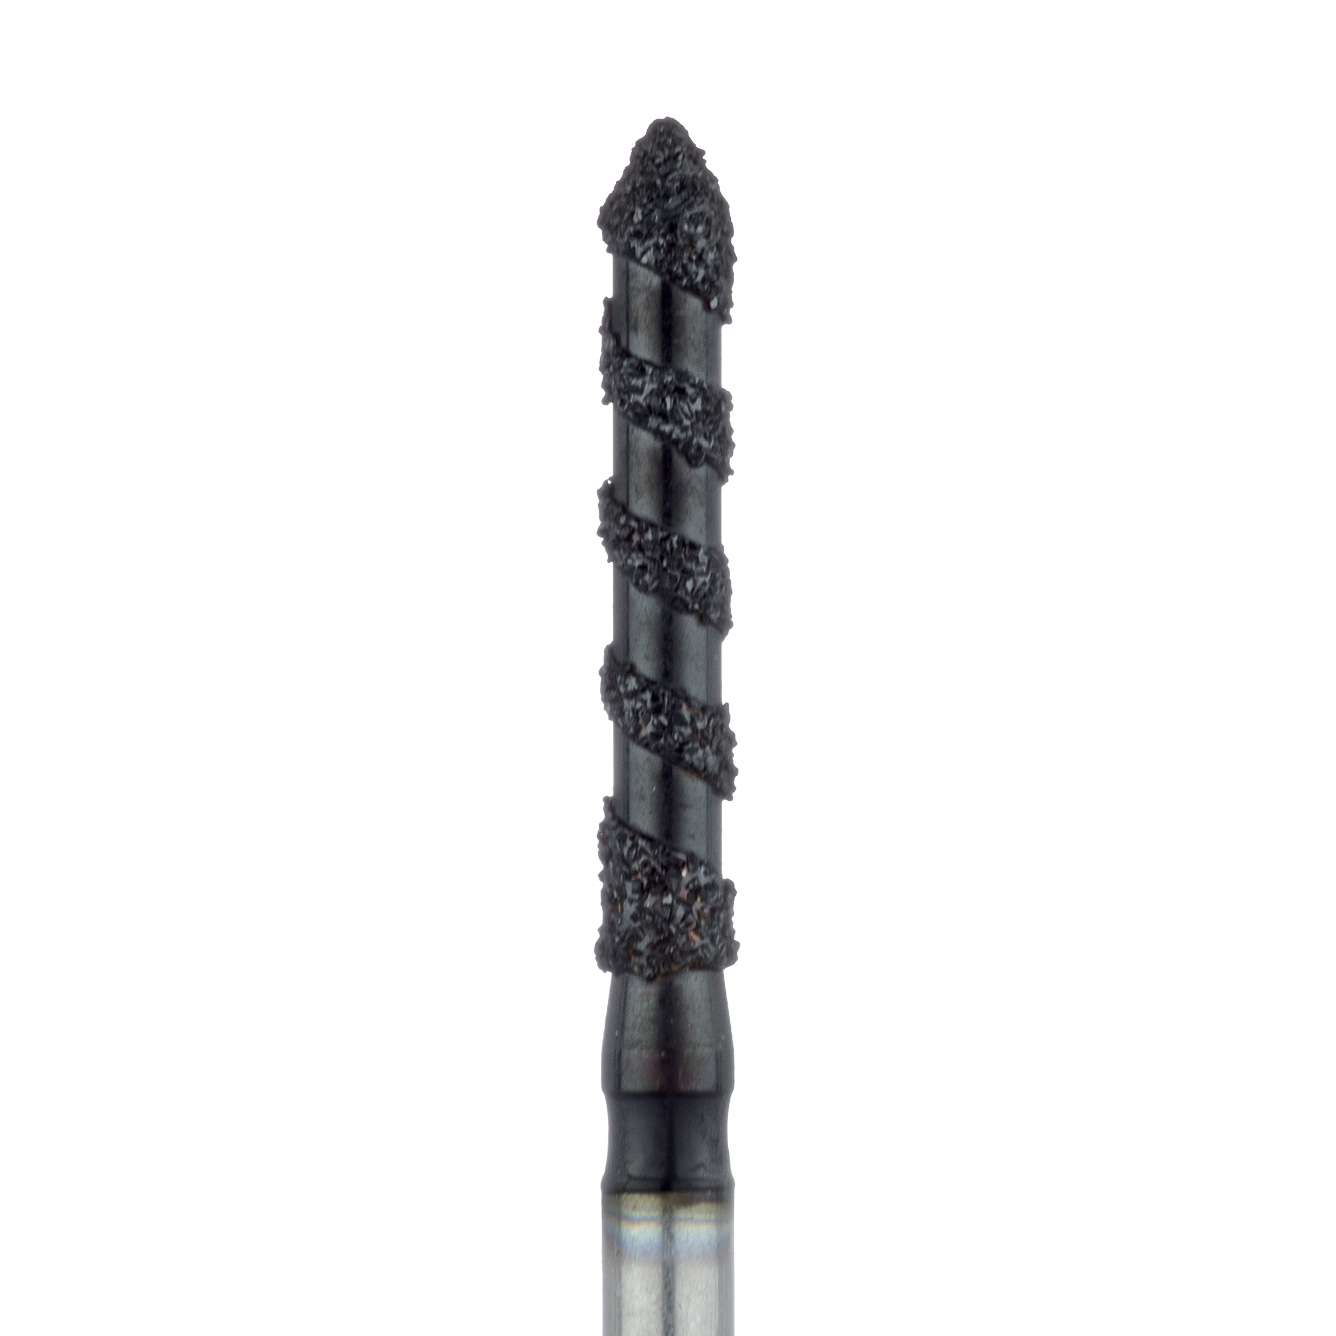 B886-016-FG Black Cobra Diamond Bur, Long, Pointed Tip Cylinder, 1.6mm Ø, Super Coarse, FG